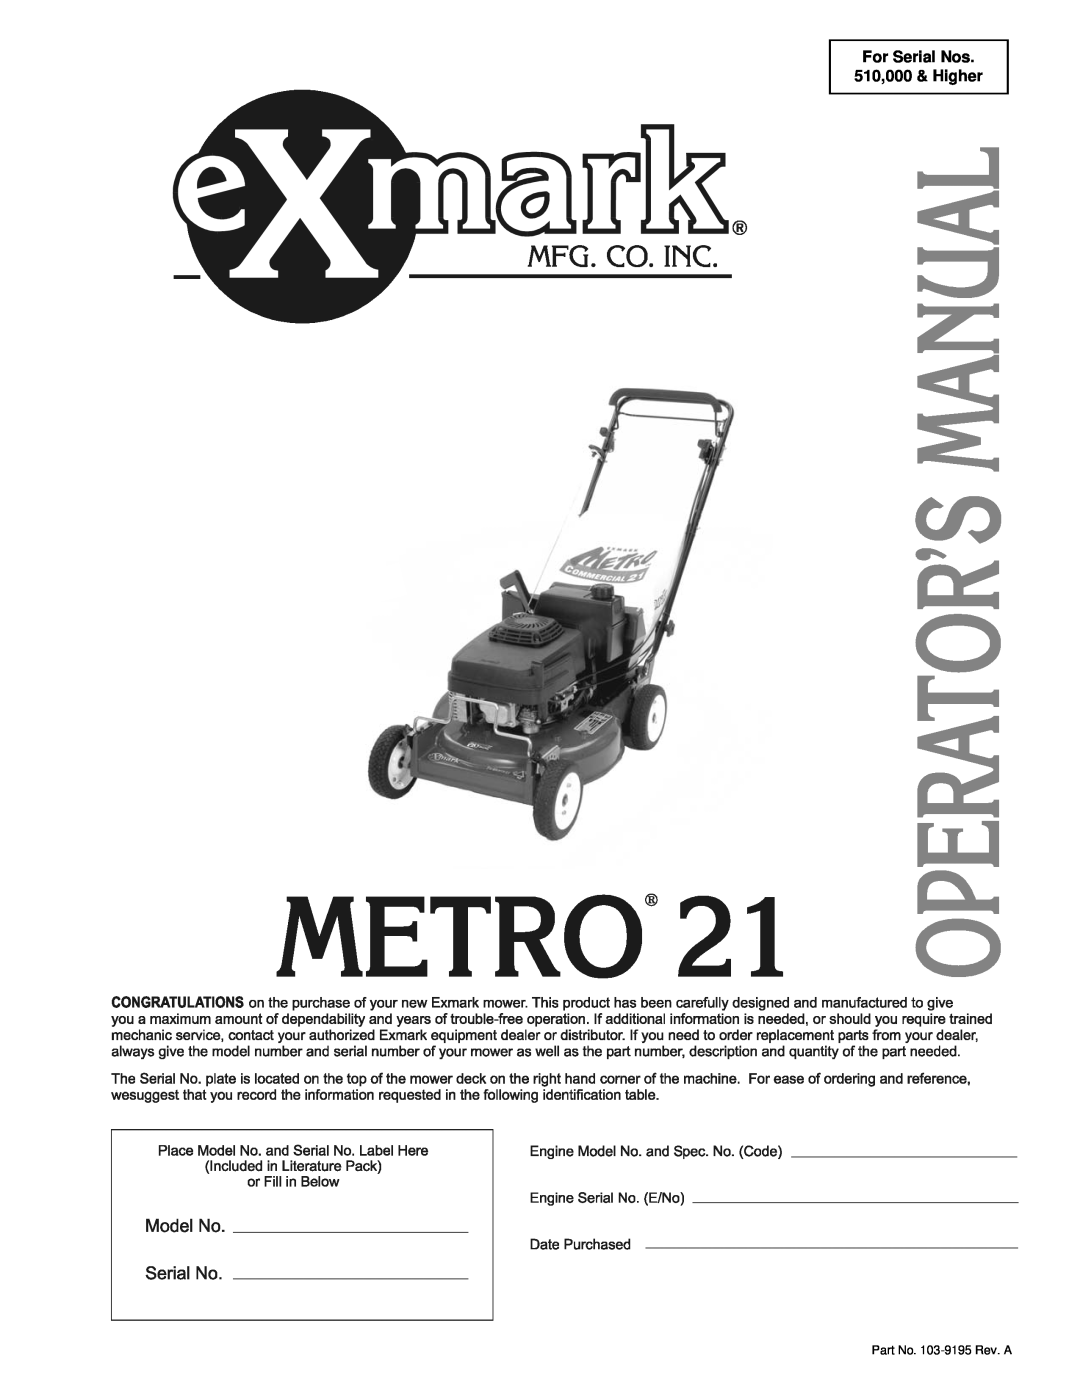 Exmark Metro 21 Series manual For Serial Nos 510,000 & Higher, Part No. 103-9195 Rev. A 